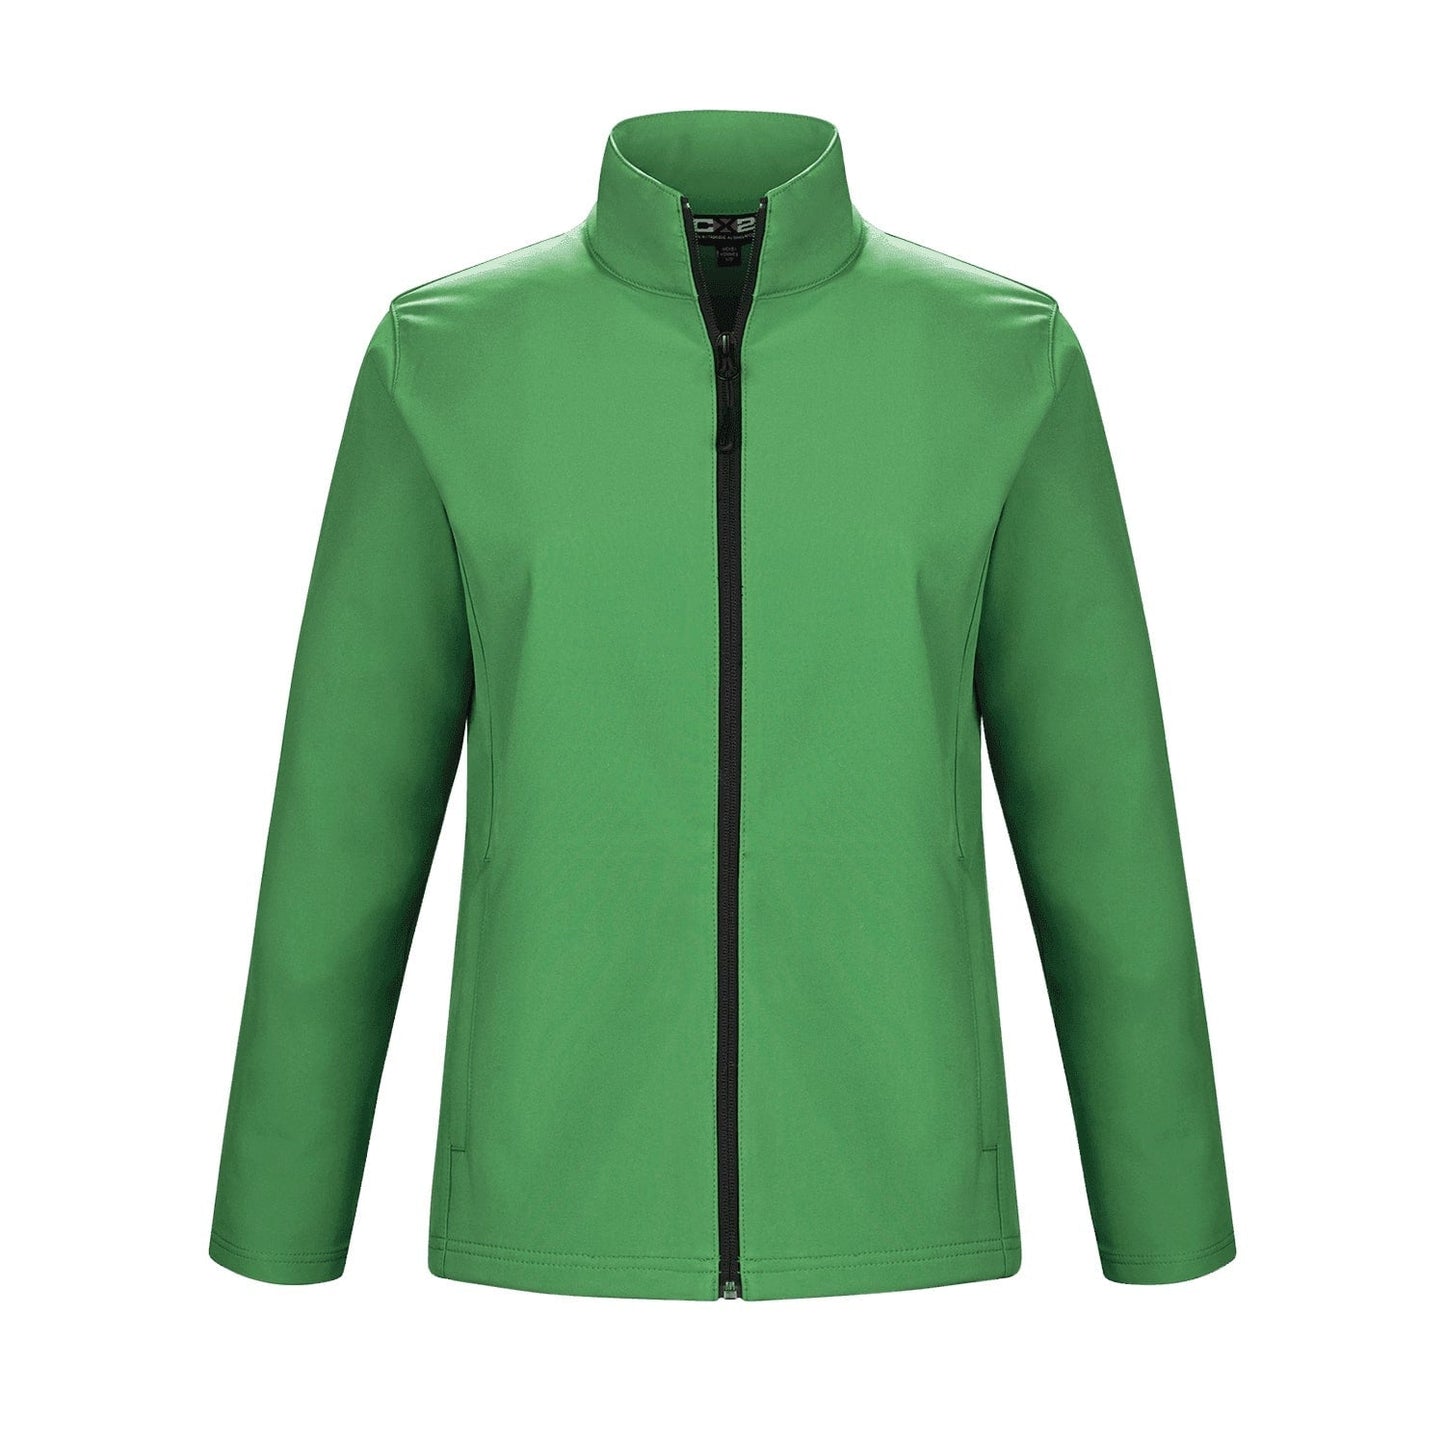 L07241 - Cadet Ladies Lightweight Softshell Jacket Green